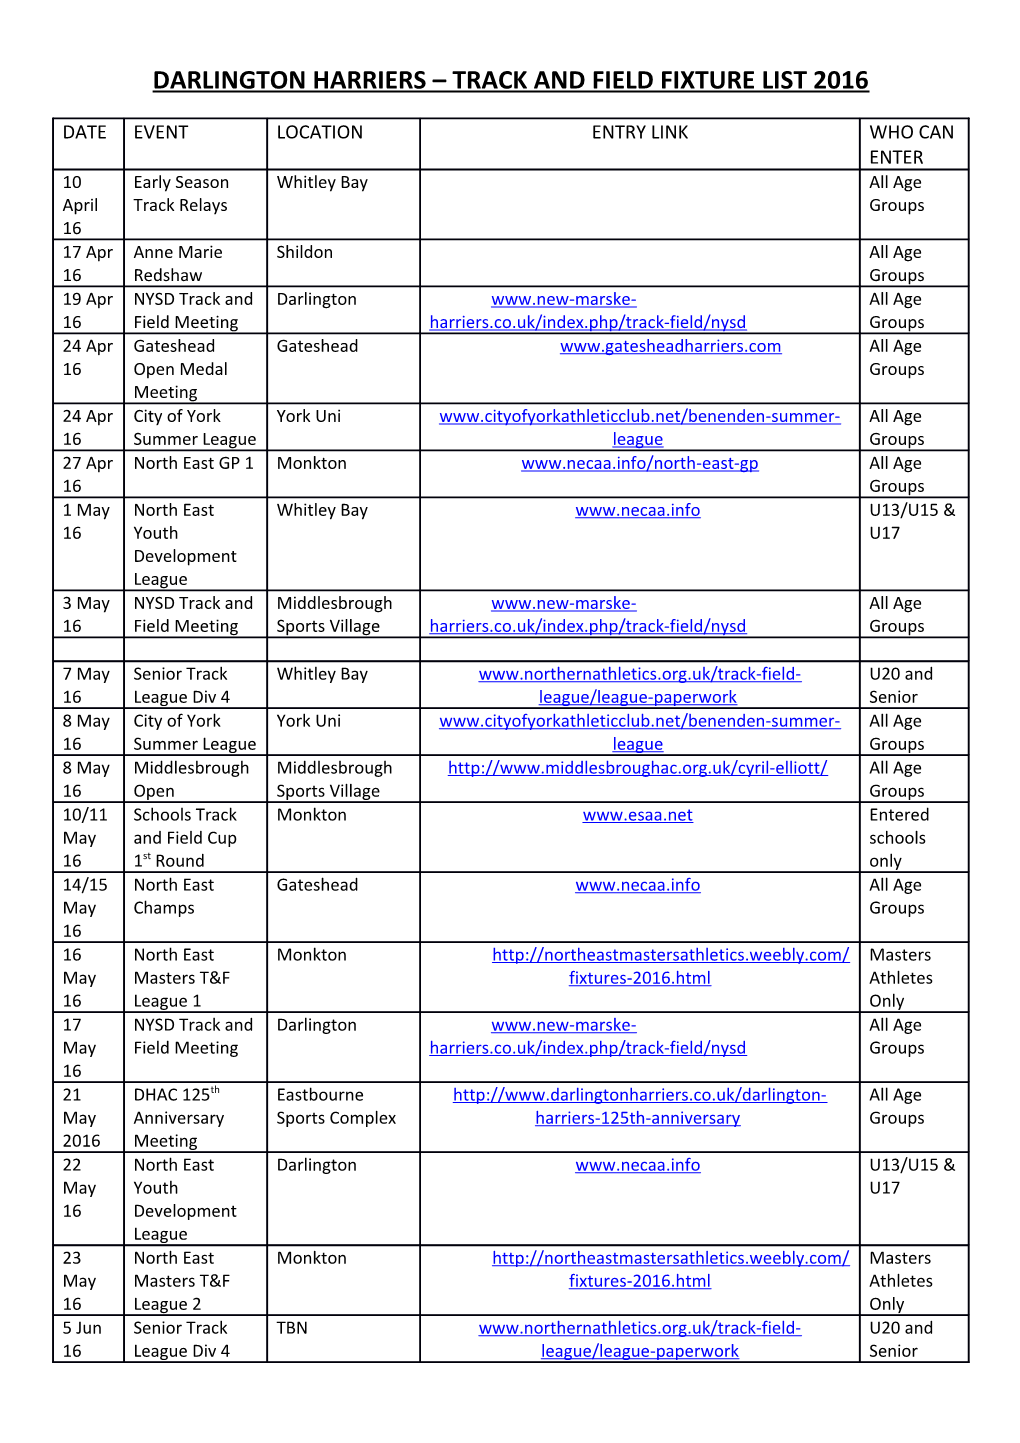 Darlington Harriers Track and Field Fixture List 2016